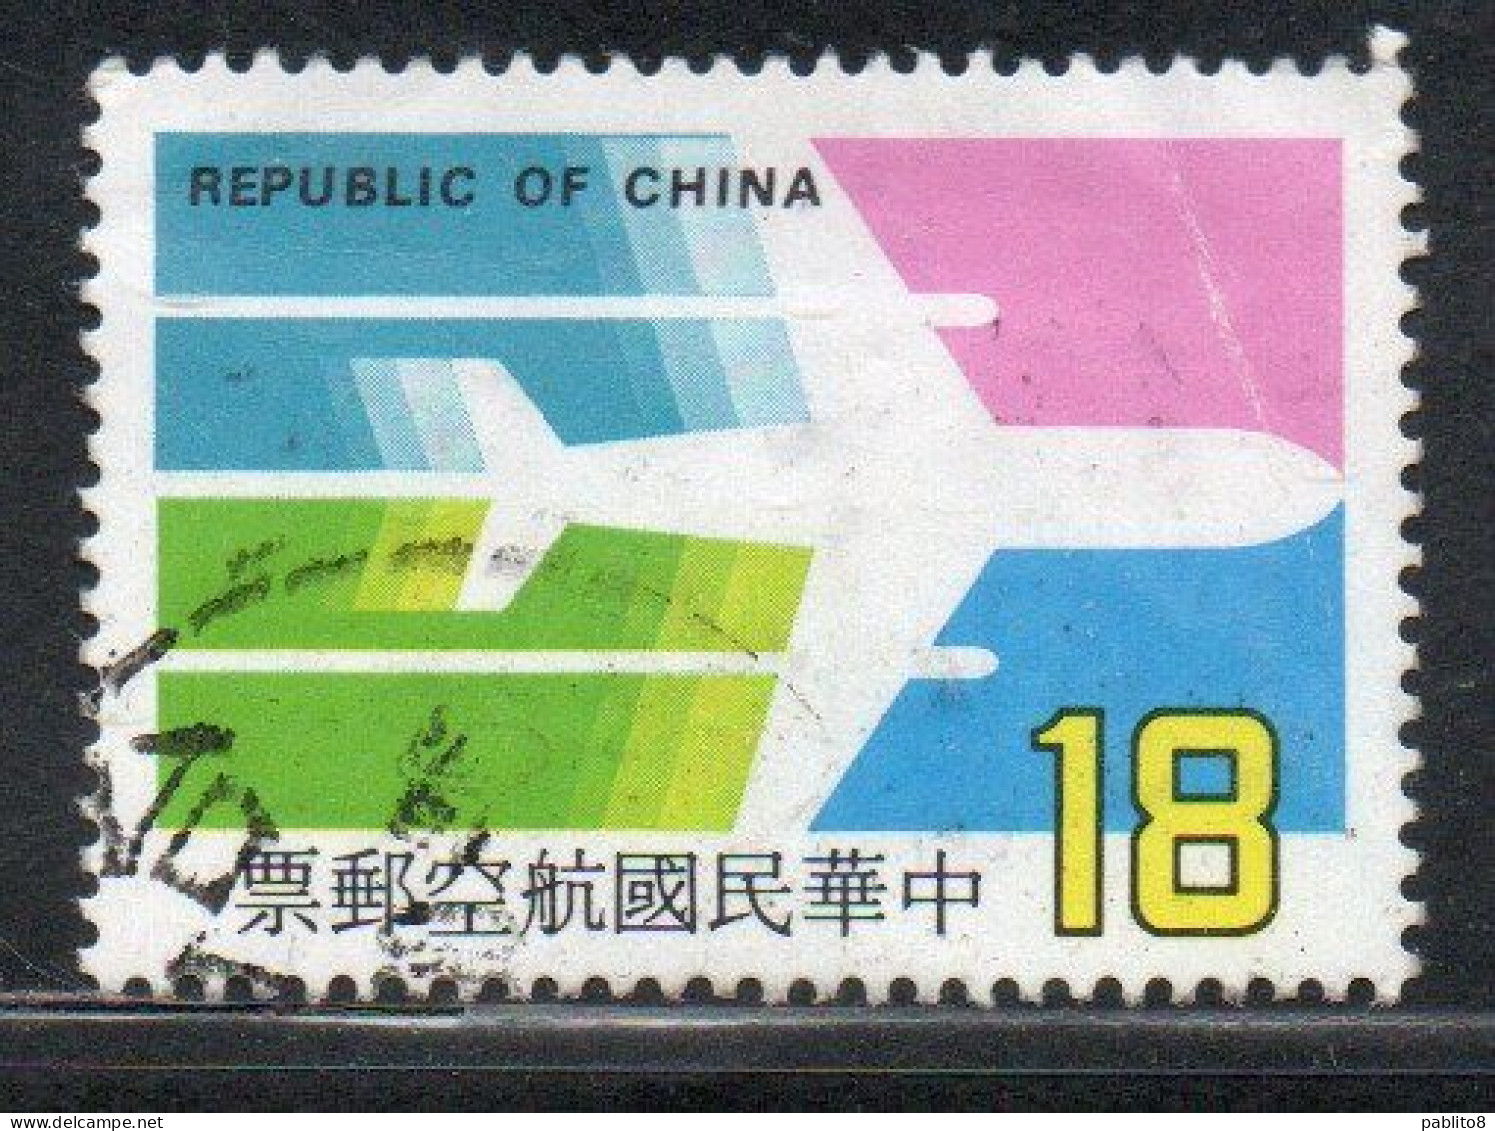 CHINA REPUBLIC CINA TAIWAN FORMOSA 1987 AIR POST MAIL AIRMAIL AIRPLANE 18$ USED USATO OBLITERE' - Posta Aerea